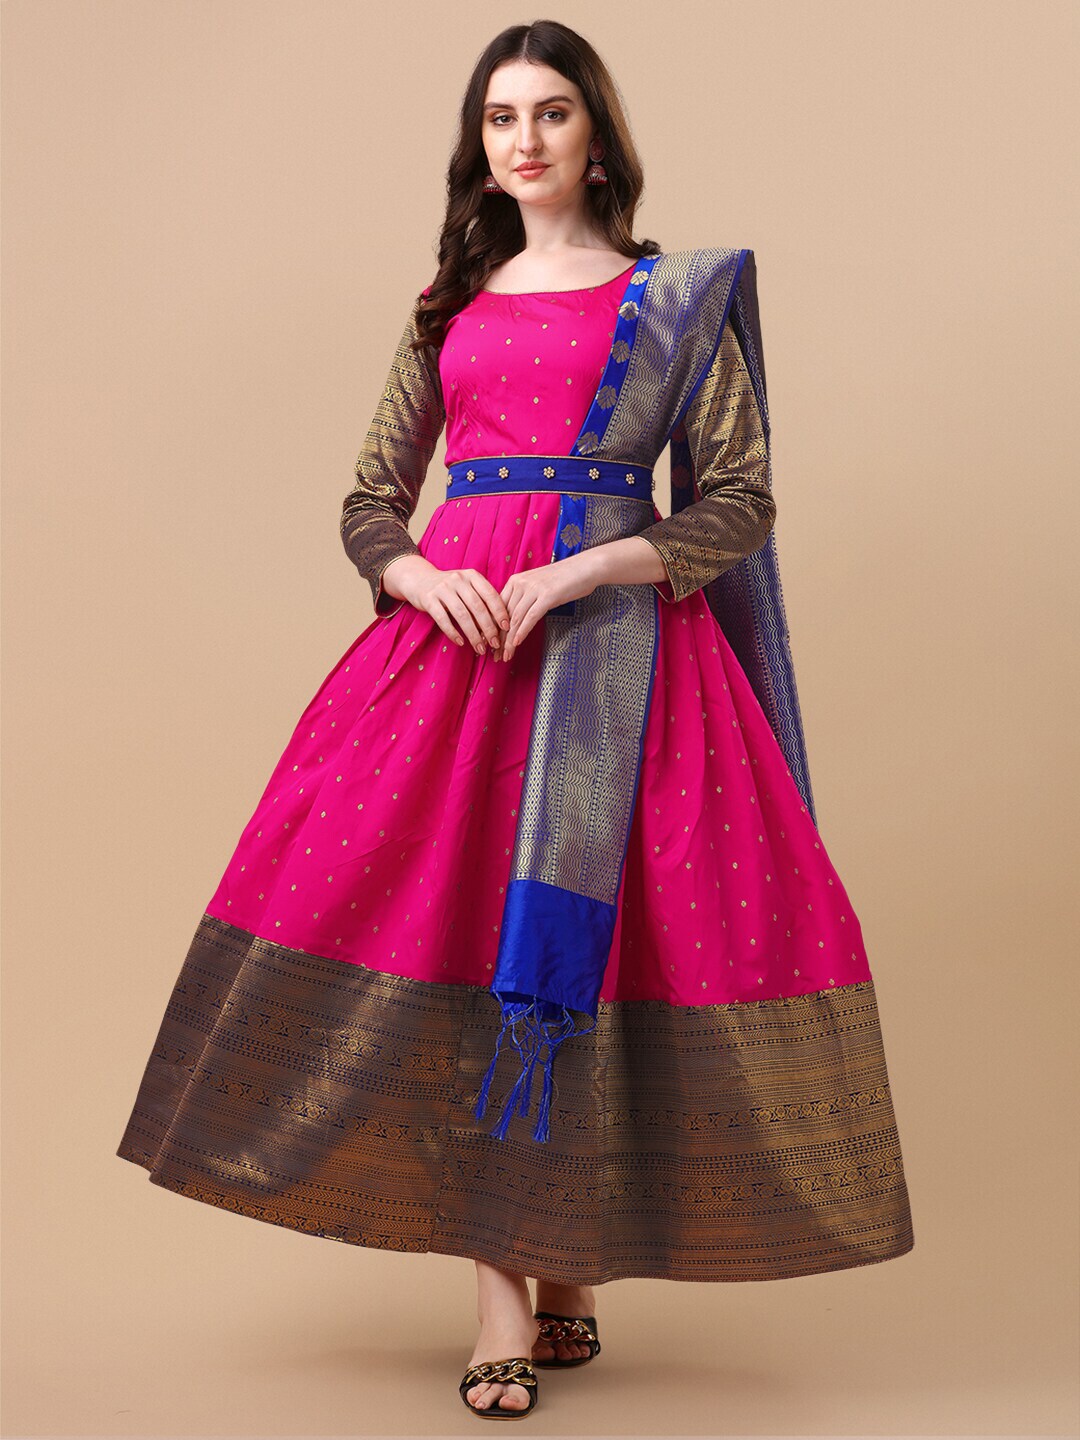 Vidraa Western Store Pink & Blue Ethnic Motifs Jacquard Ethnic Maxi Dress Price in India